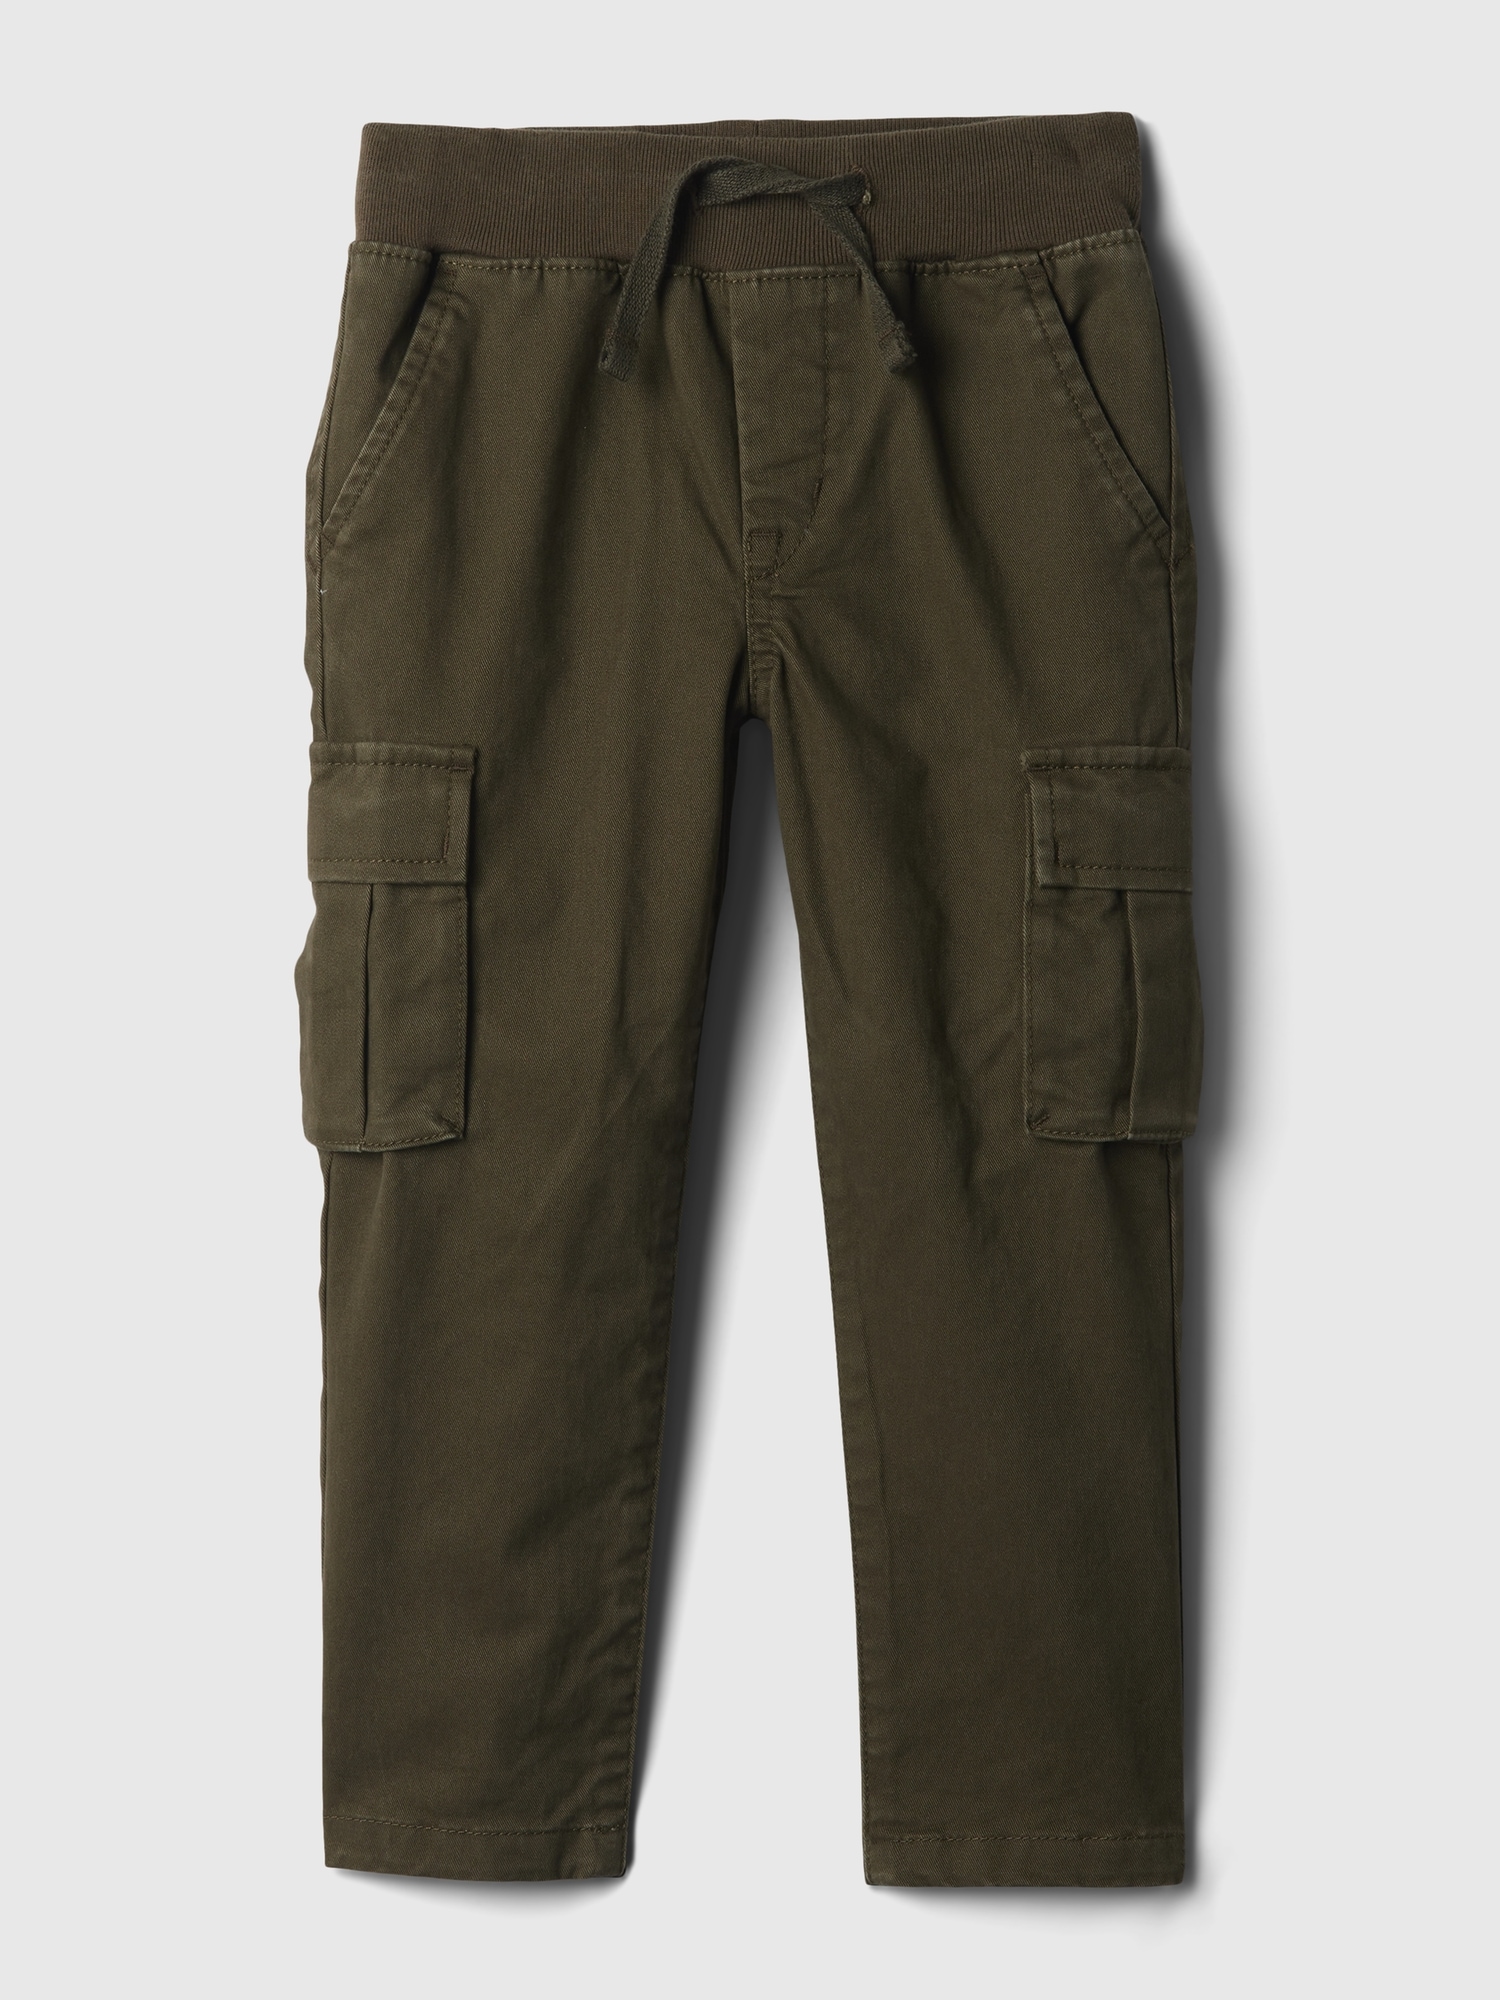 Gap Kids Light Gray Boys Cargo Pants Adjustable Waist Size 8 EUC